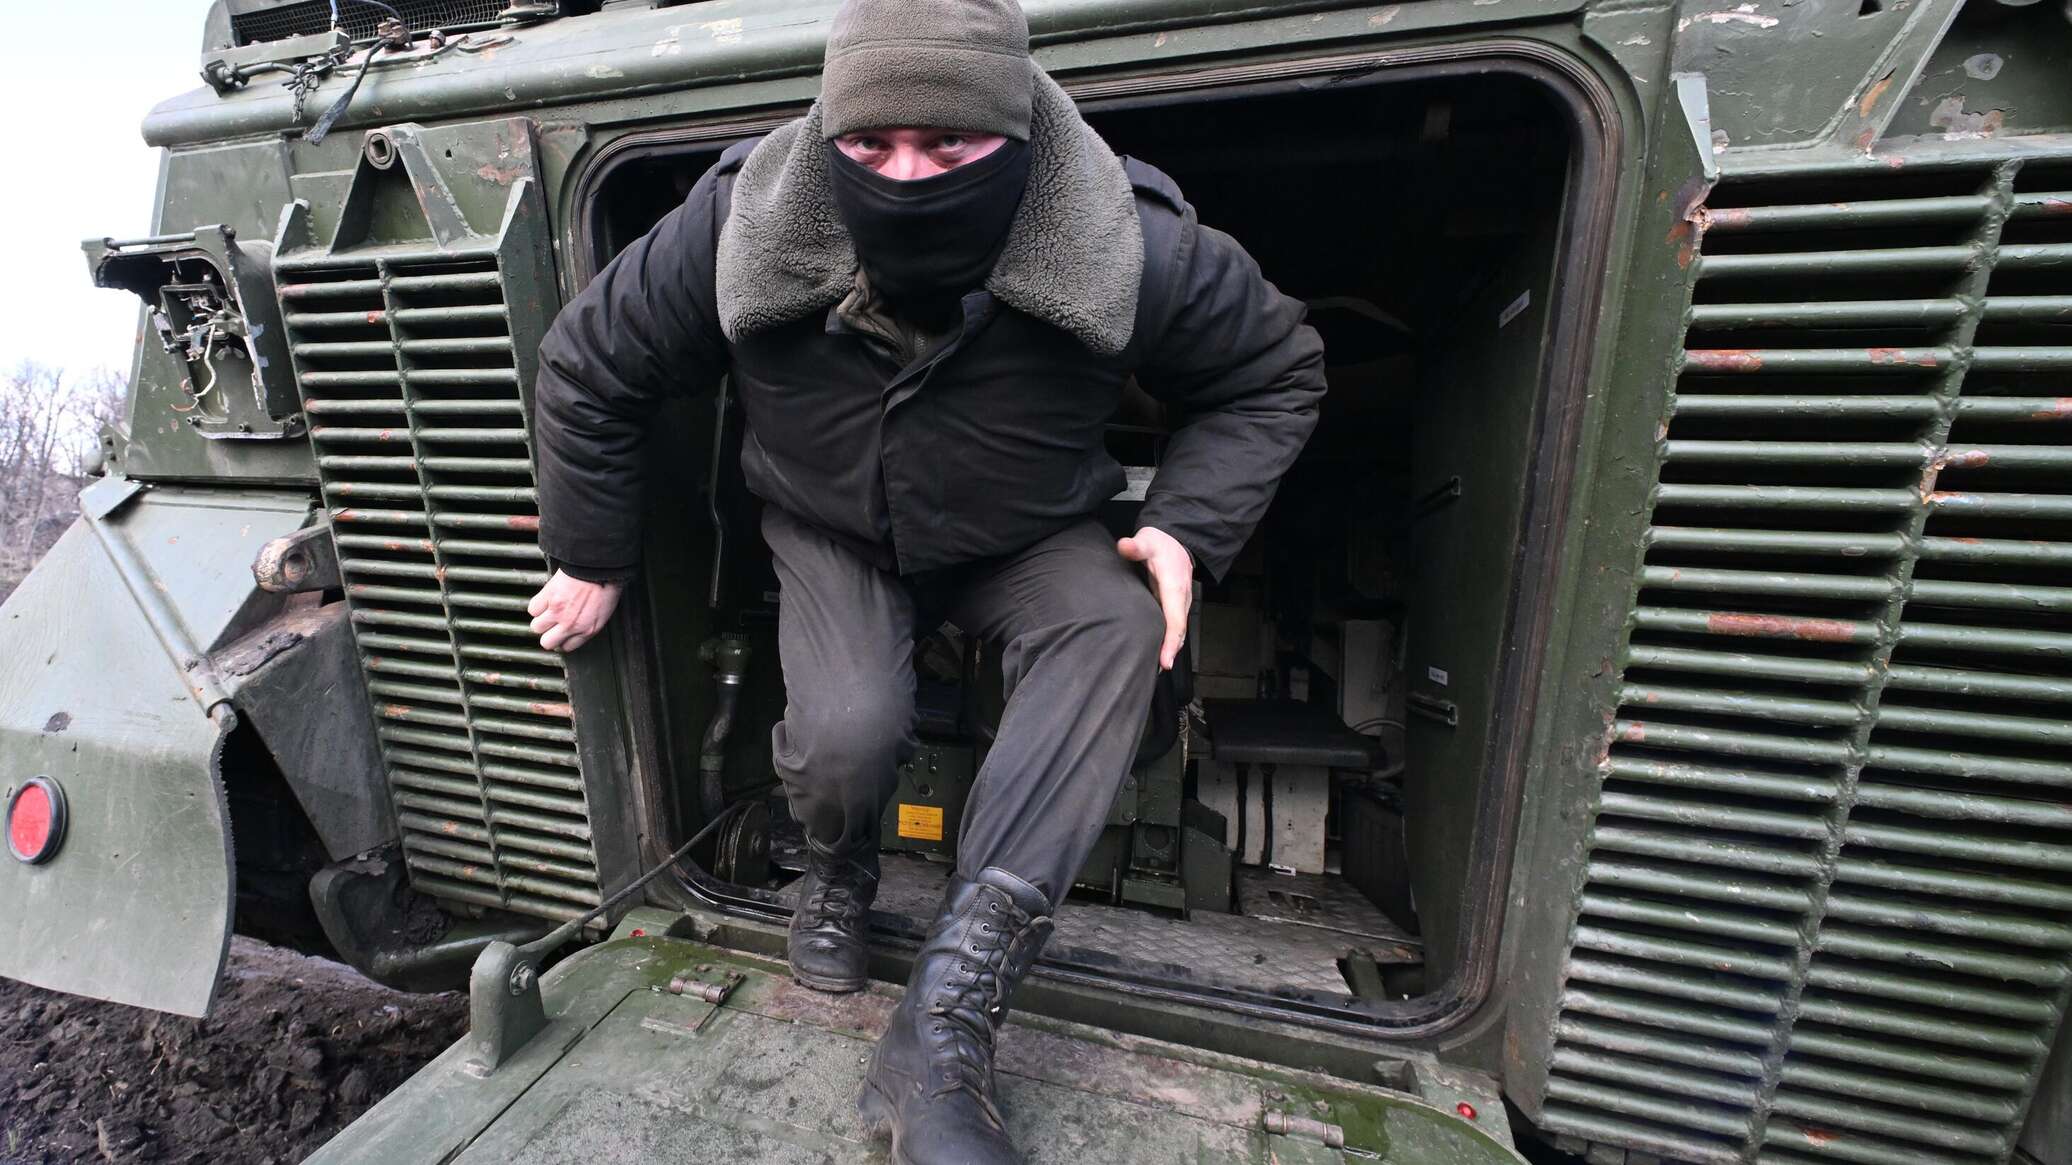 صور لقيام مختصين روس بترميم وإصلاح مدرعة "ماردر"